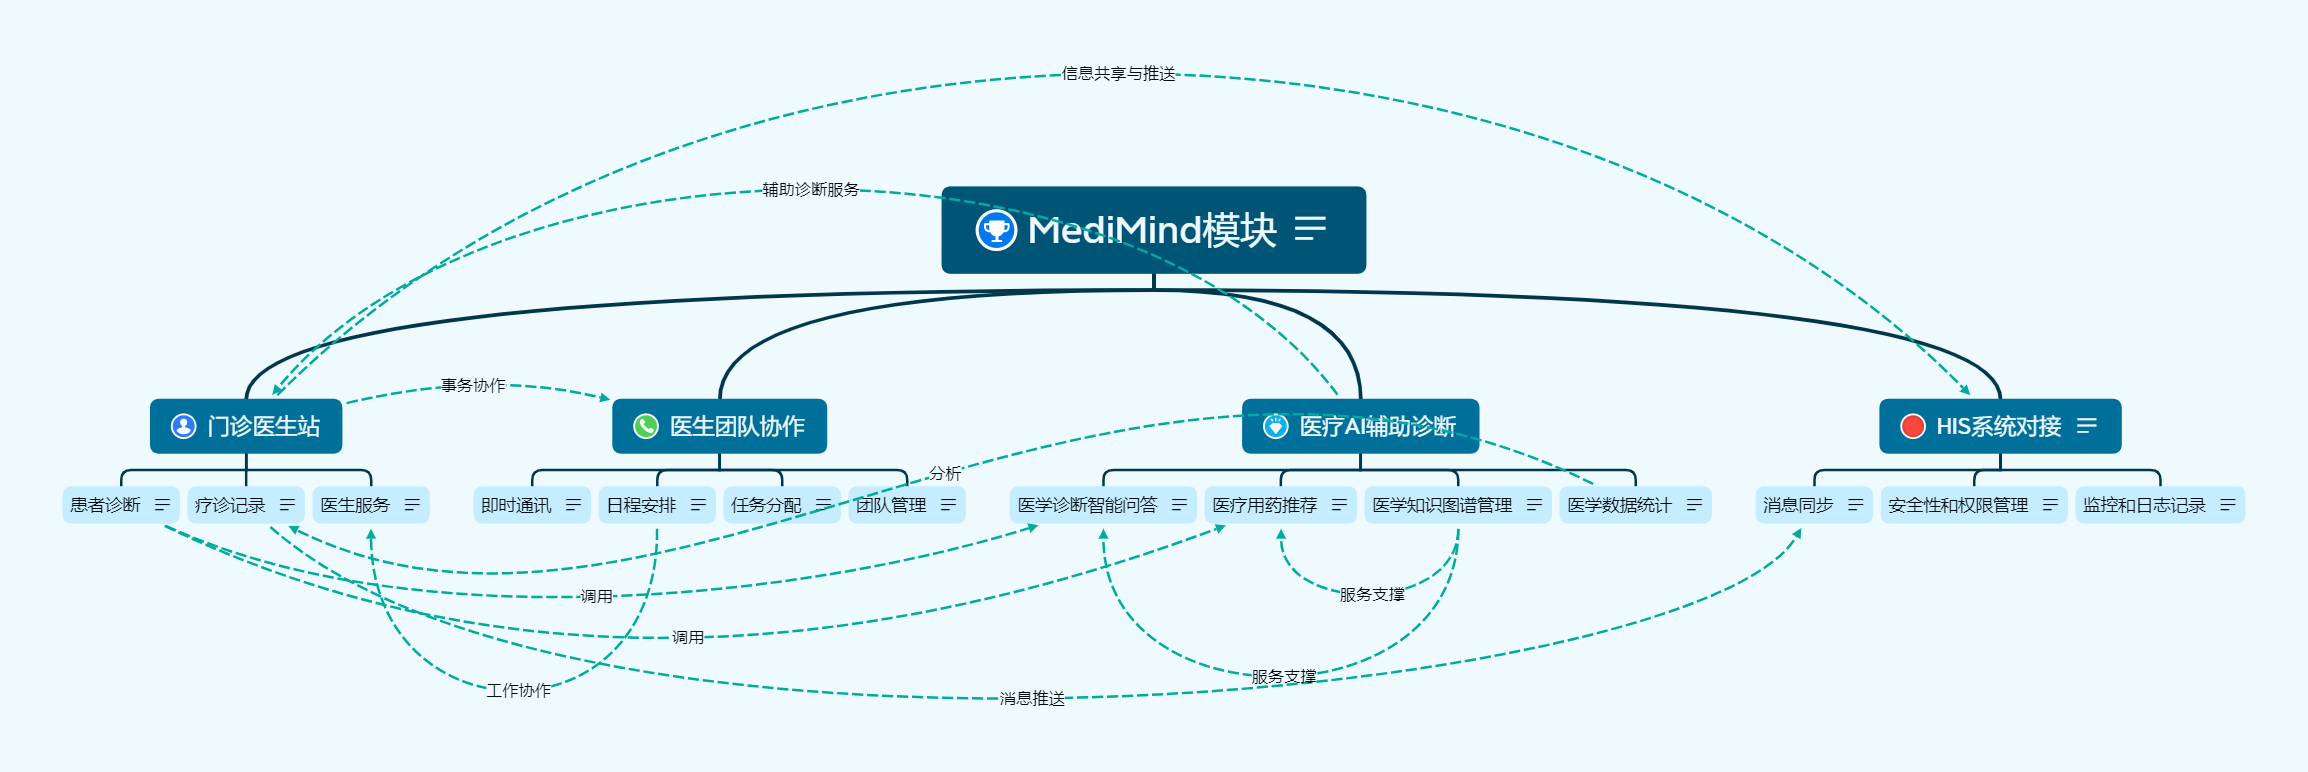 MediMind模块图